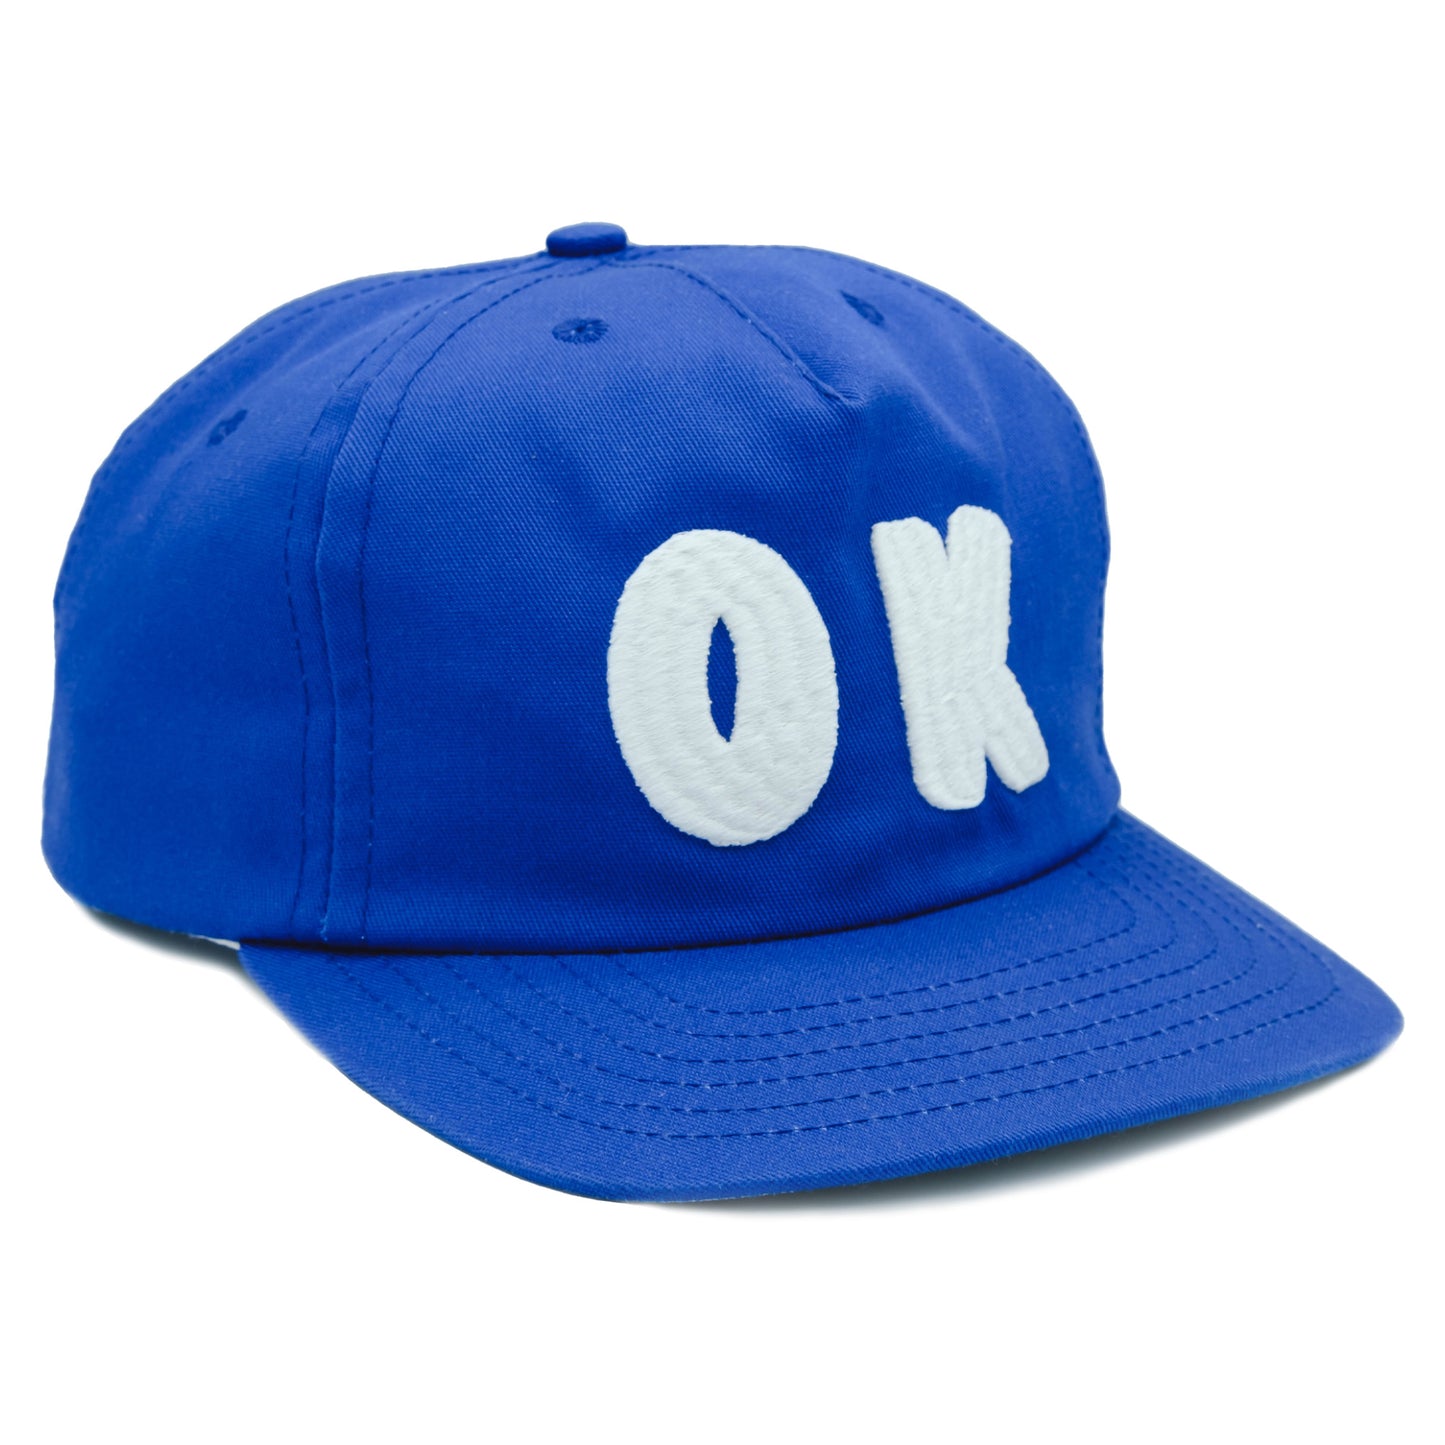 OK LOGO HAT (ROYAL)